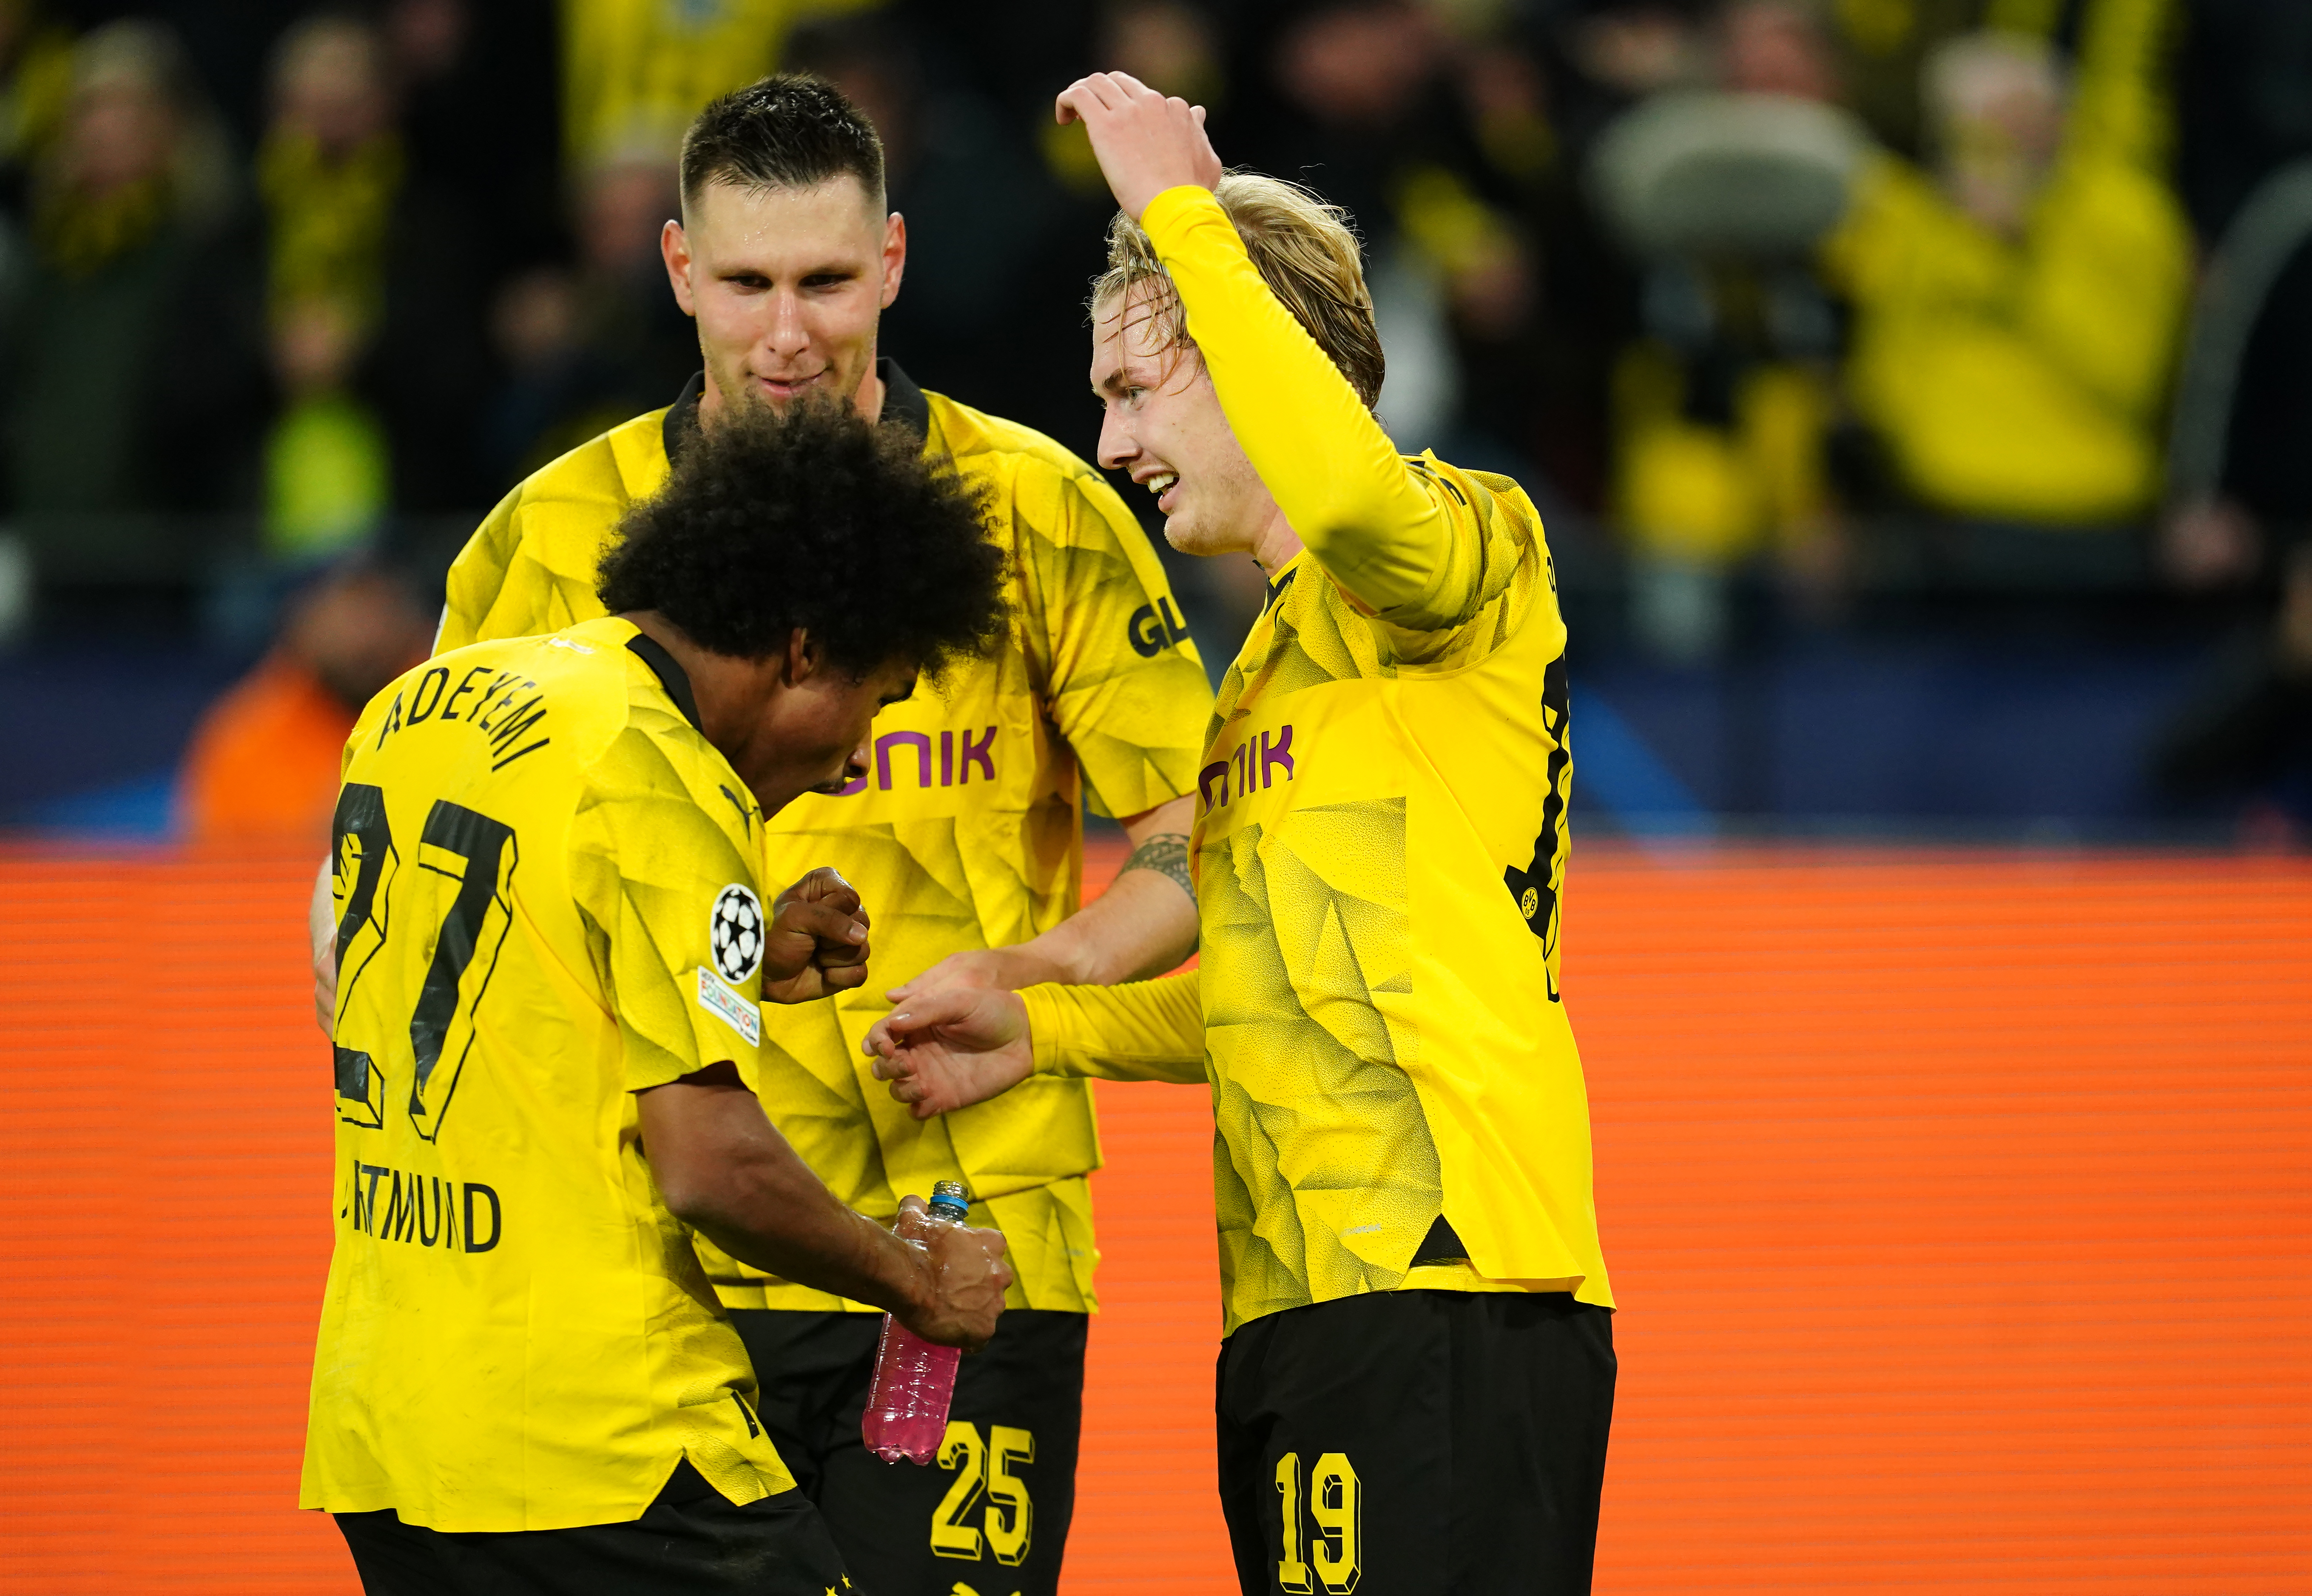 Borussia Dortmund celebrate